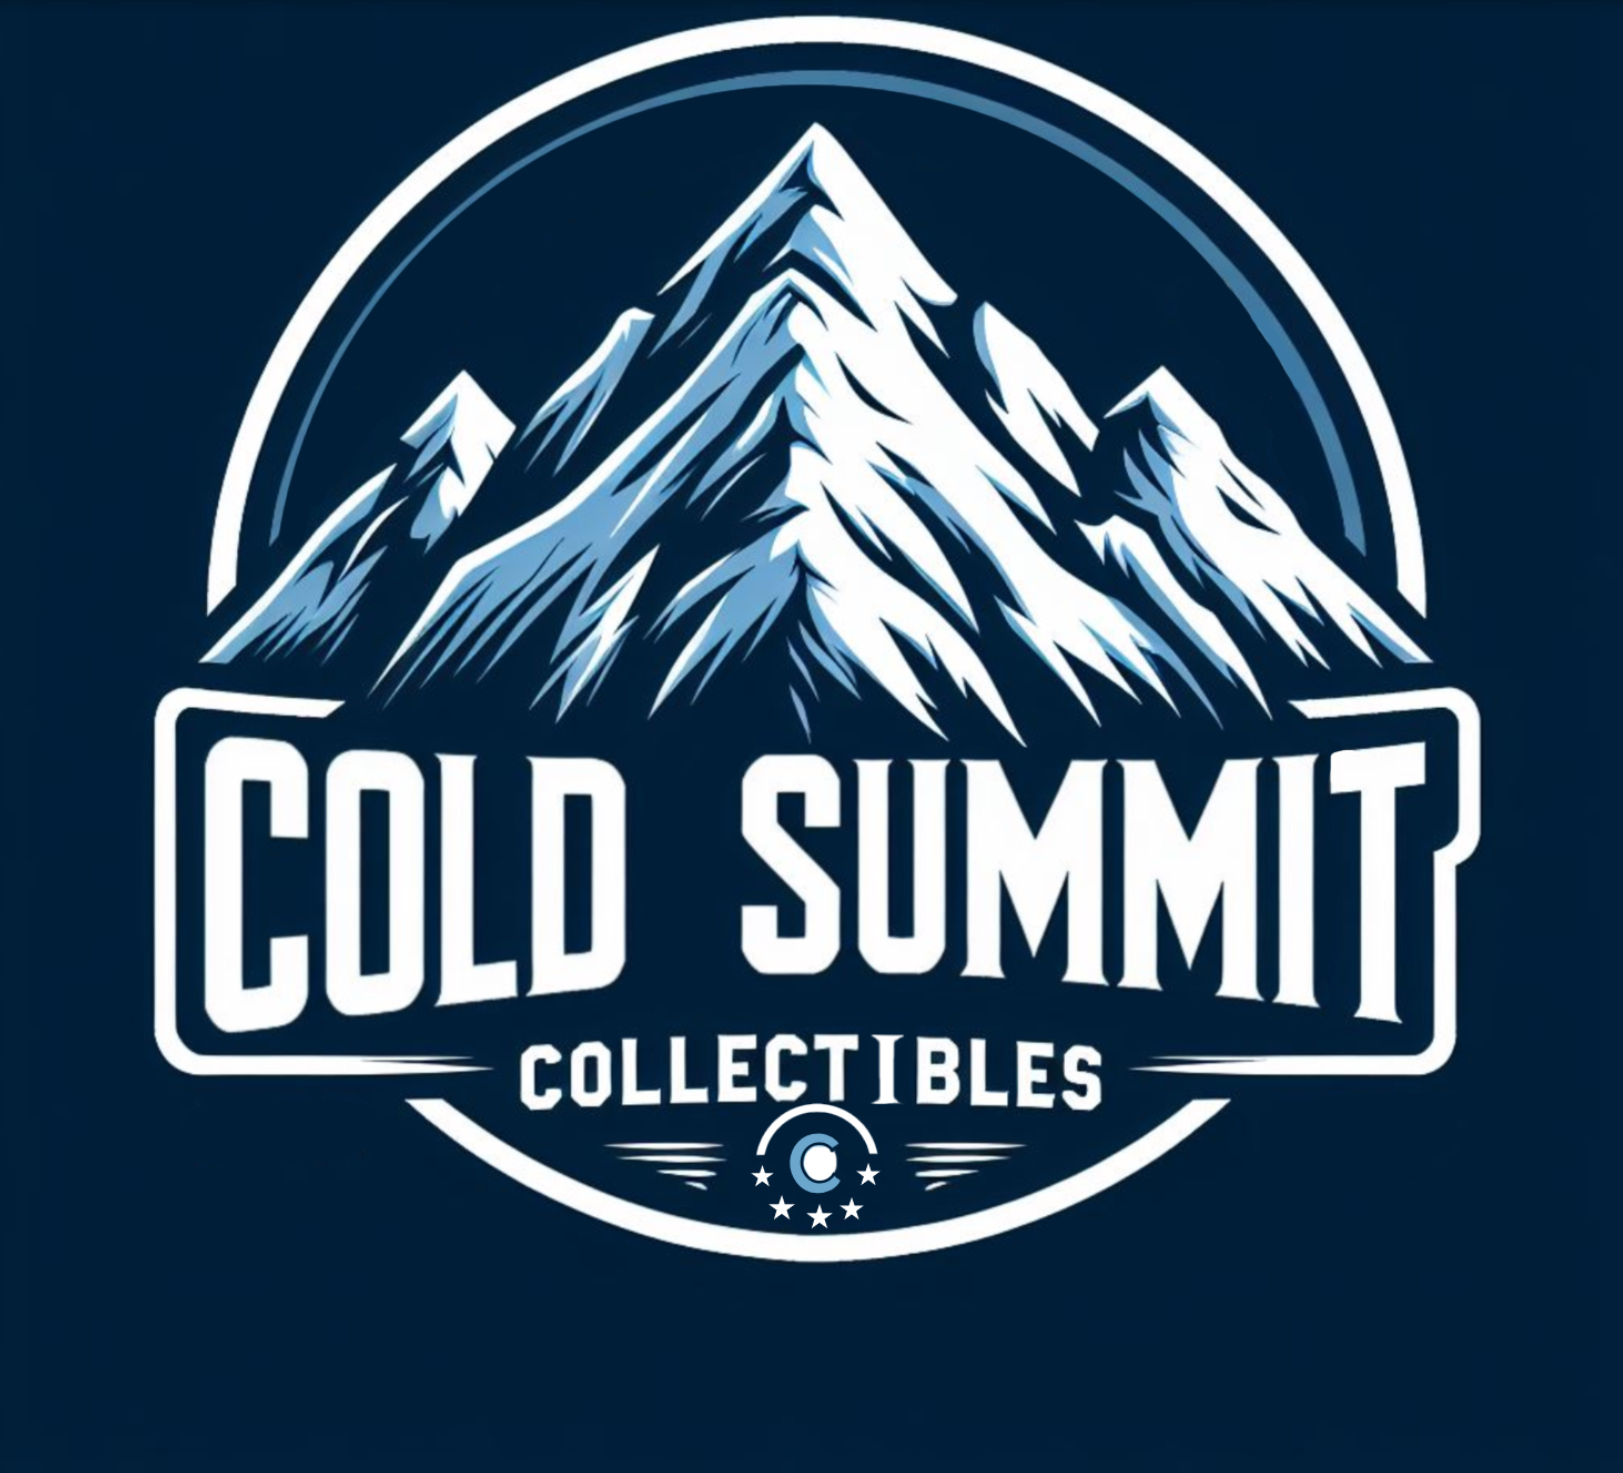 Cold Summit Collectibles LLC | AuctionNinja